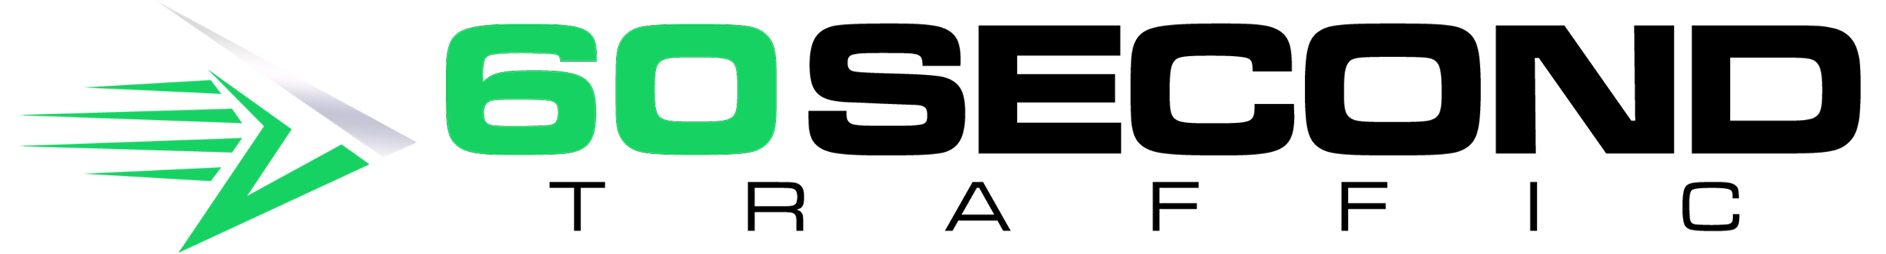 stacker-logo